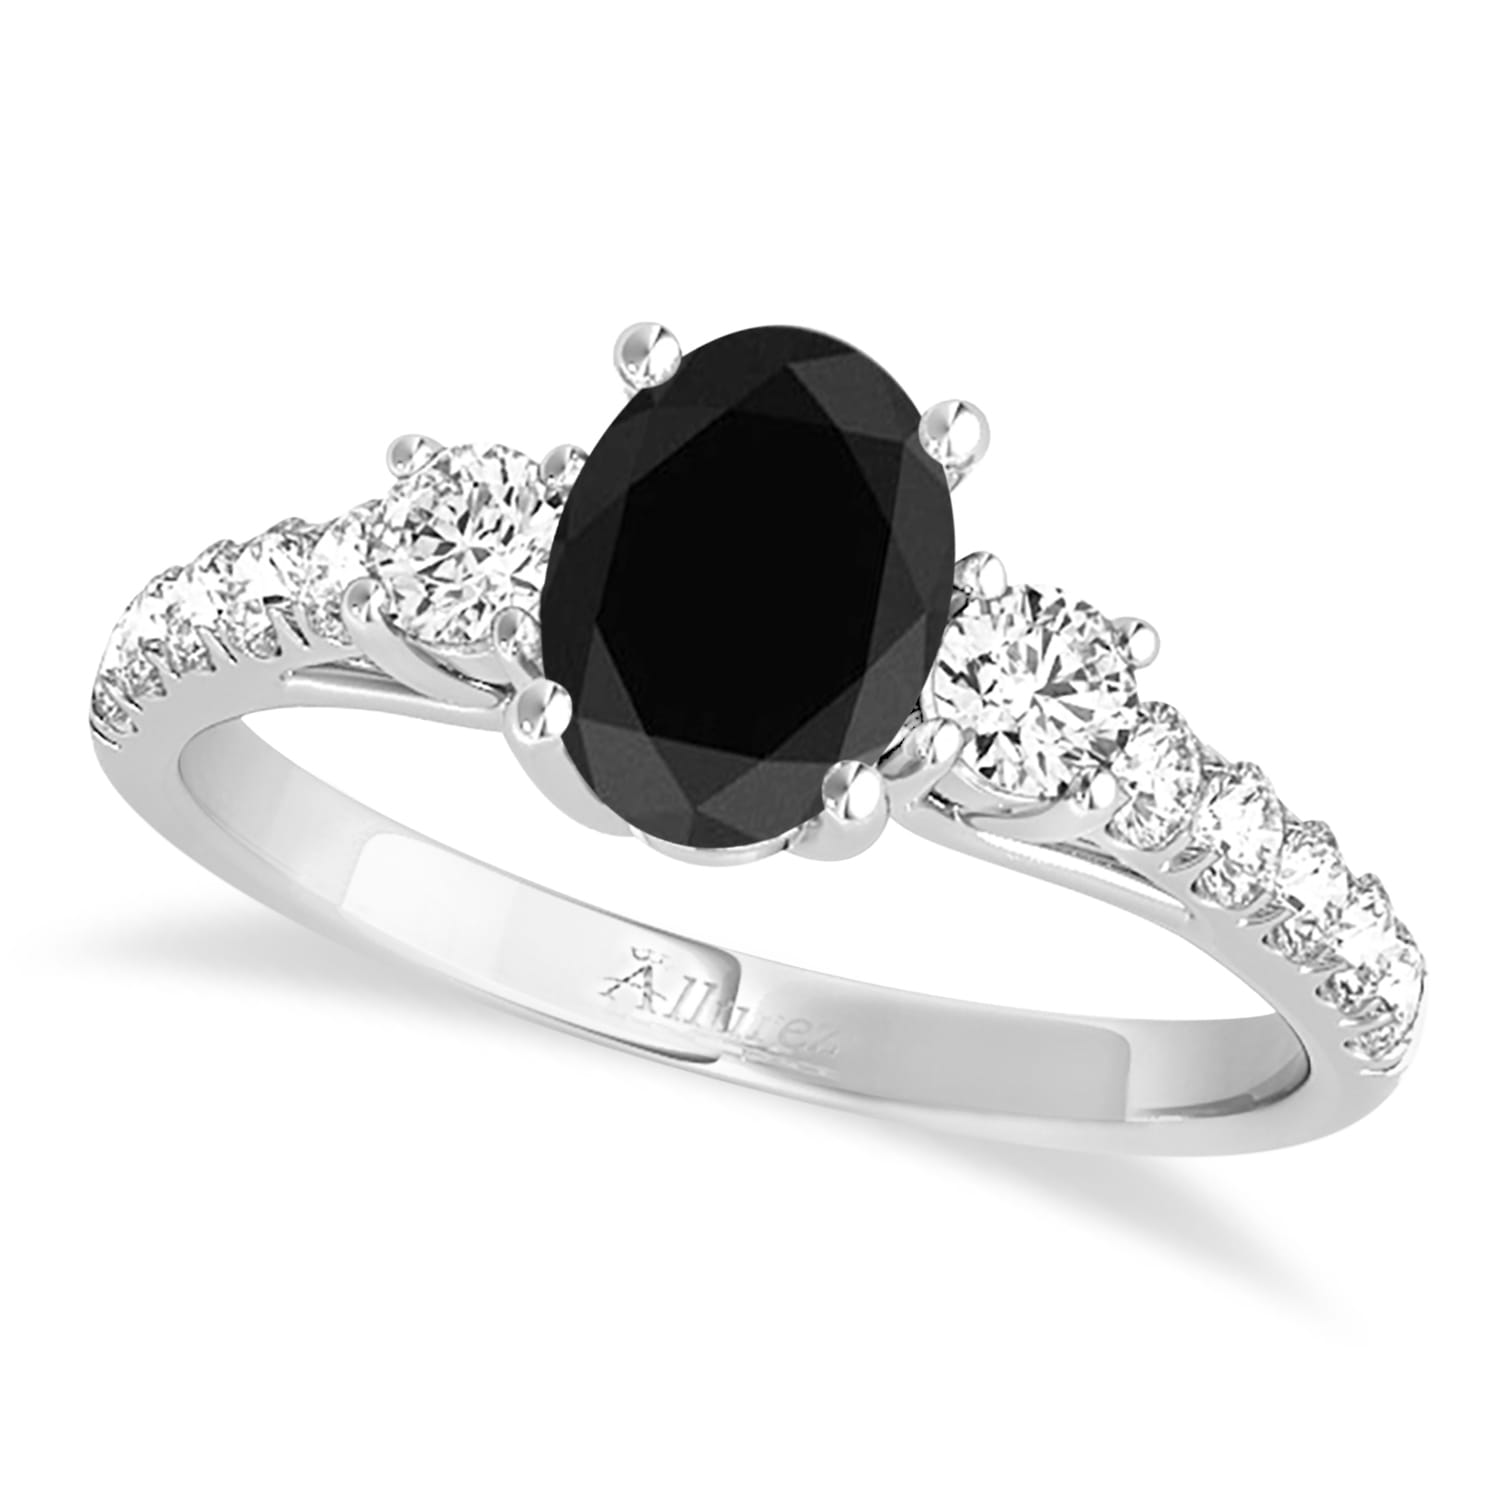 Oval Cut Black Diamond & Diamond Engagement Ring Palladium (1.40ct)